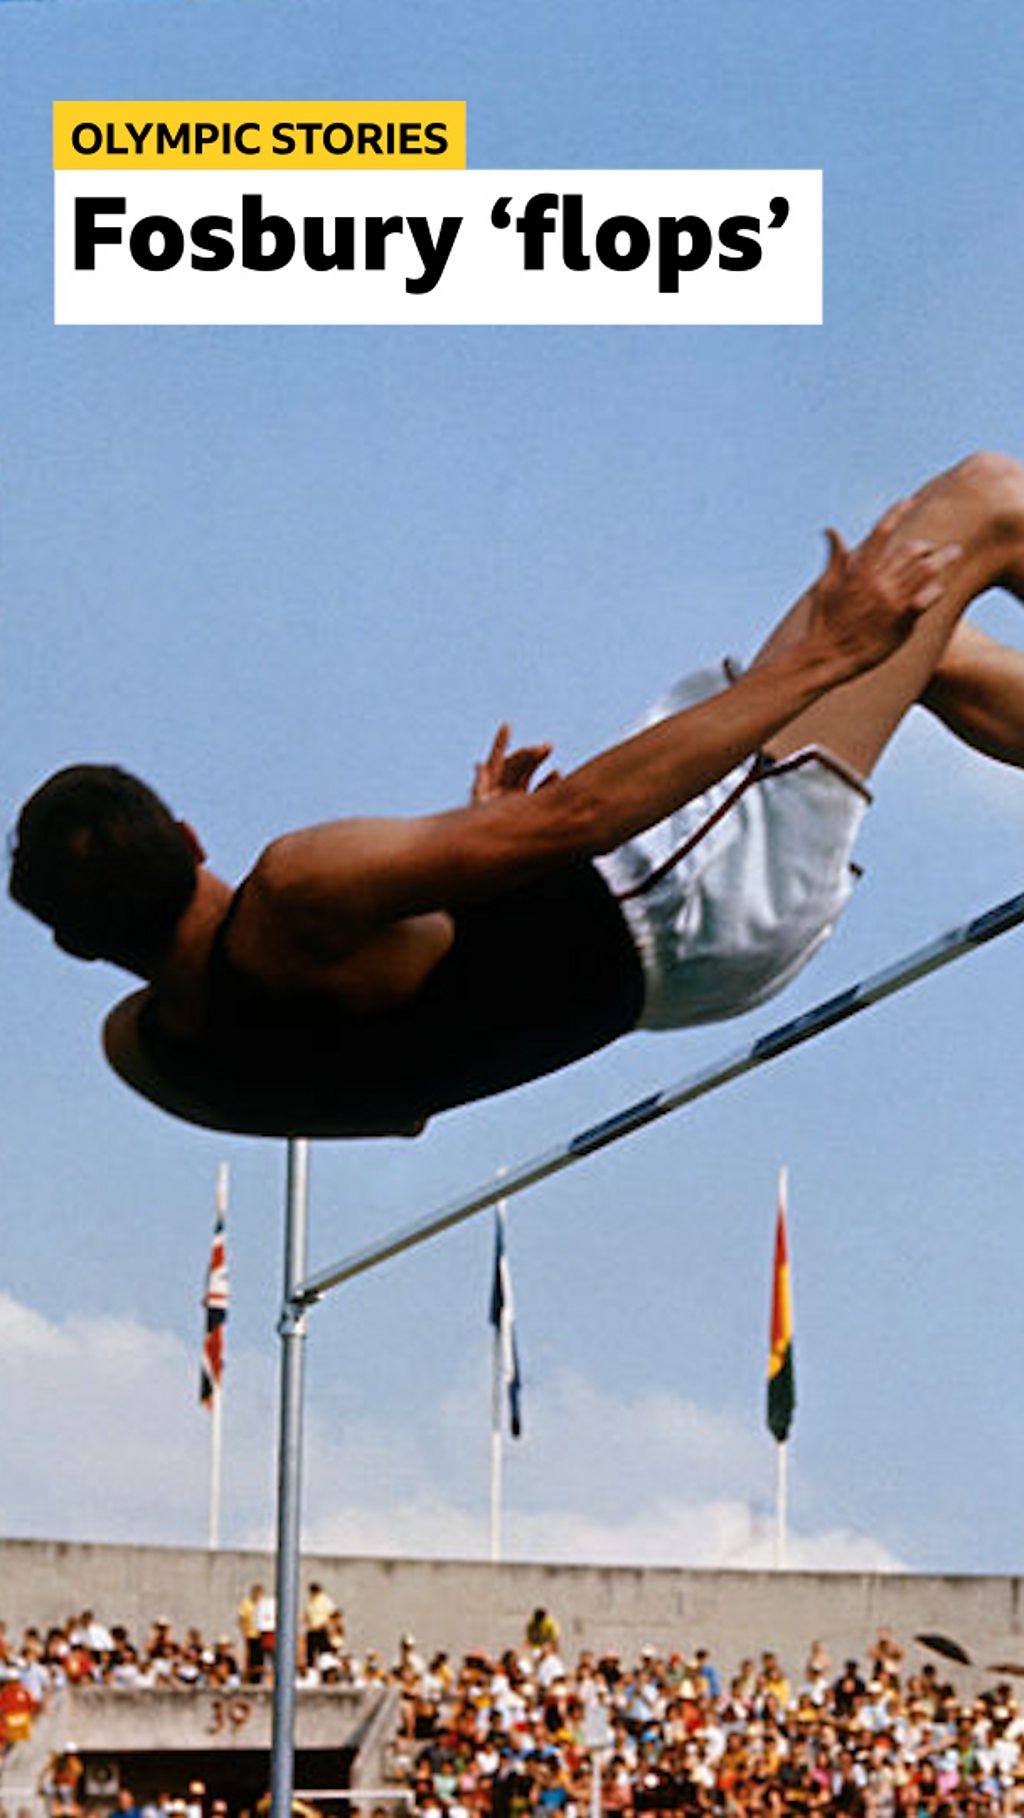 Dick Fosbury's high jump 'flop'